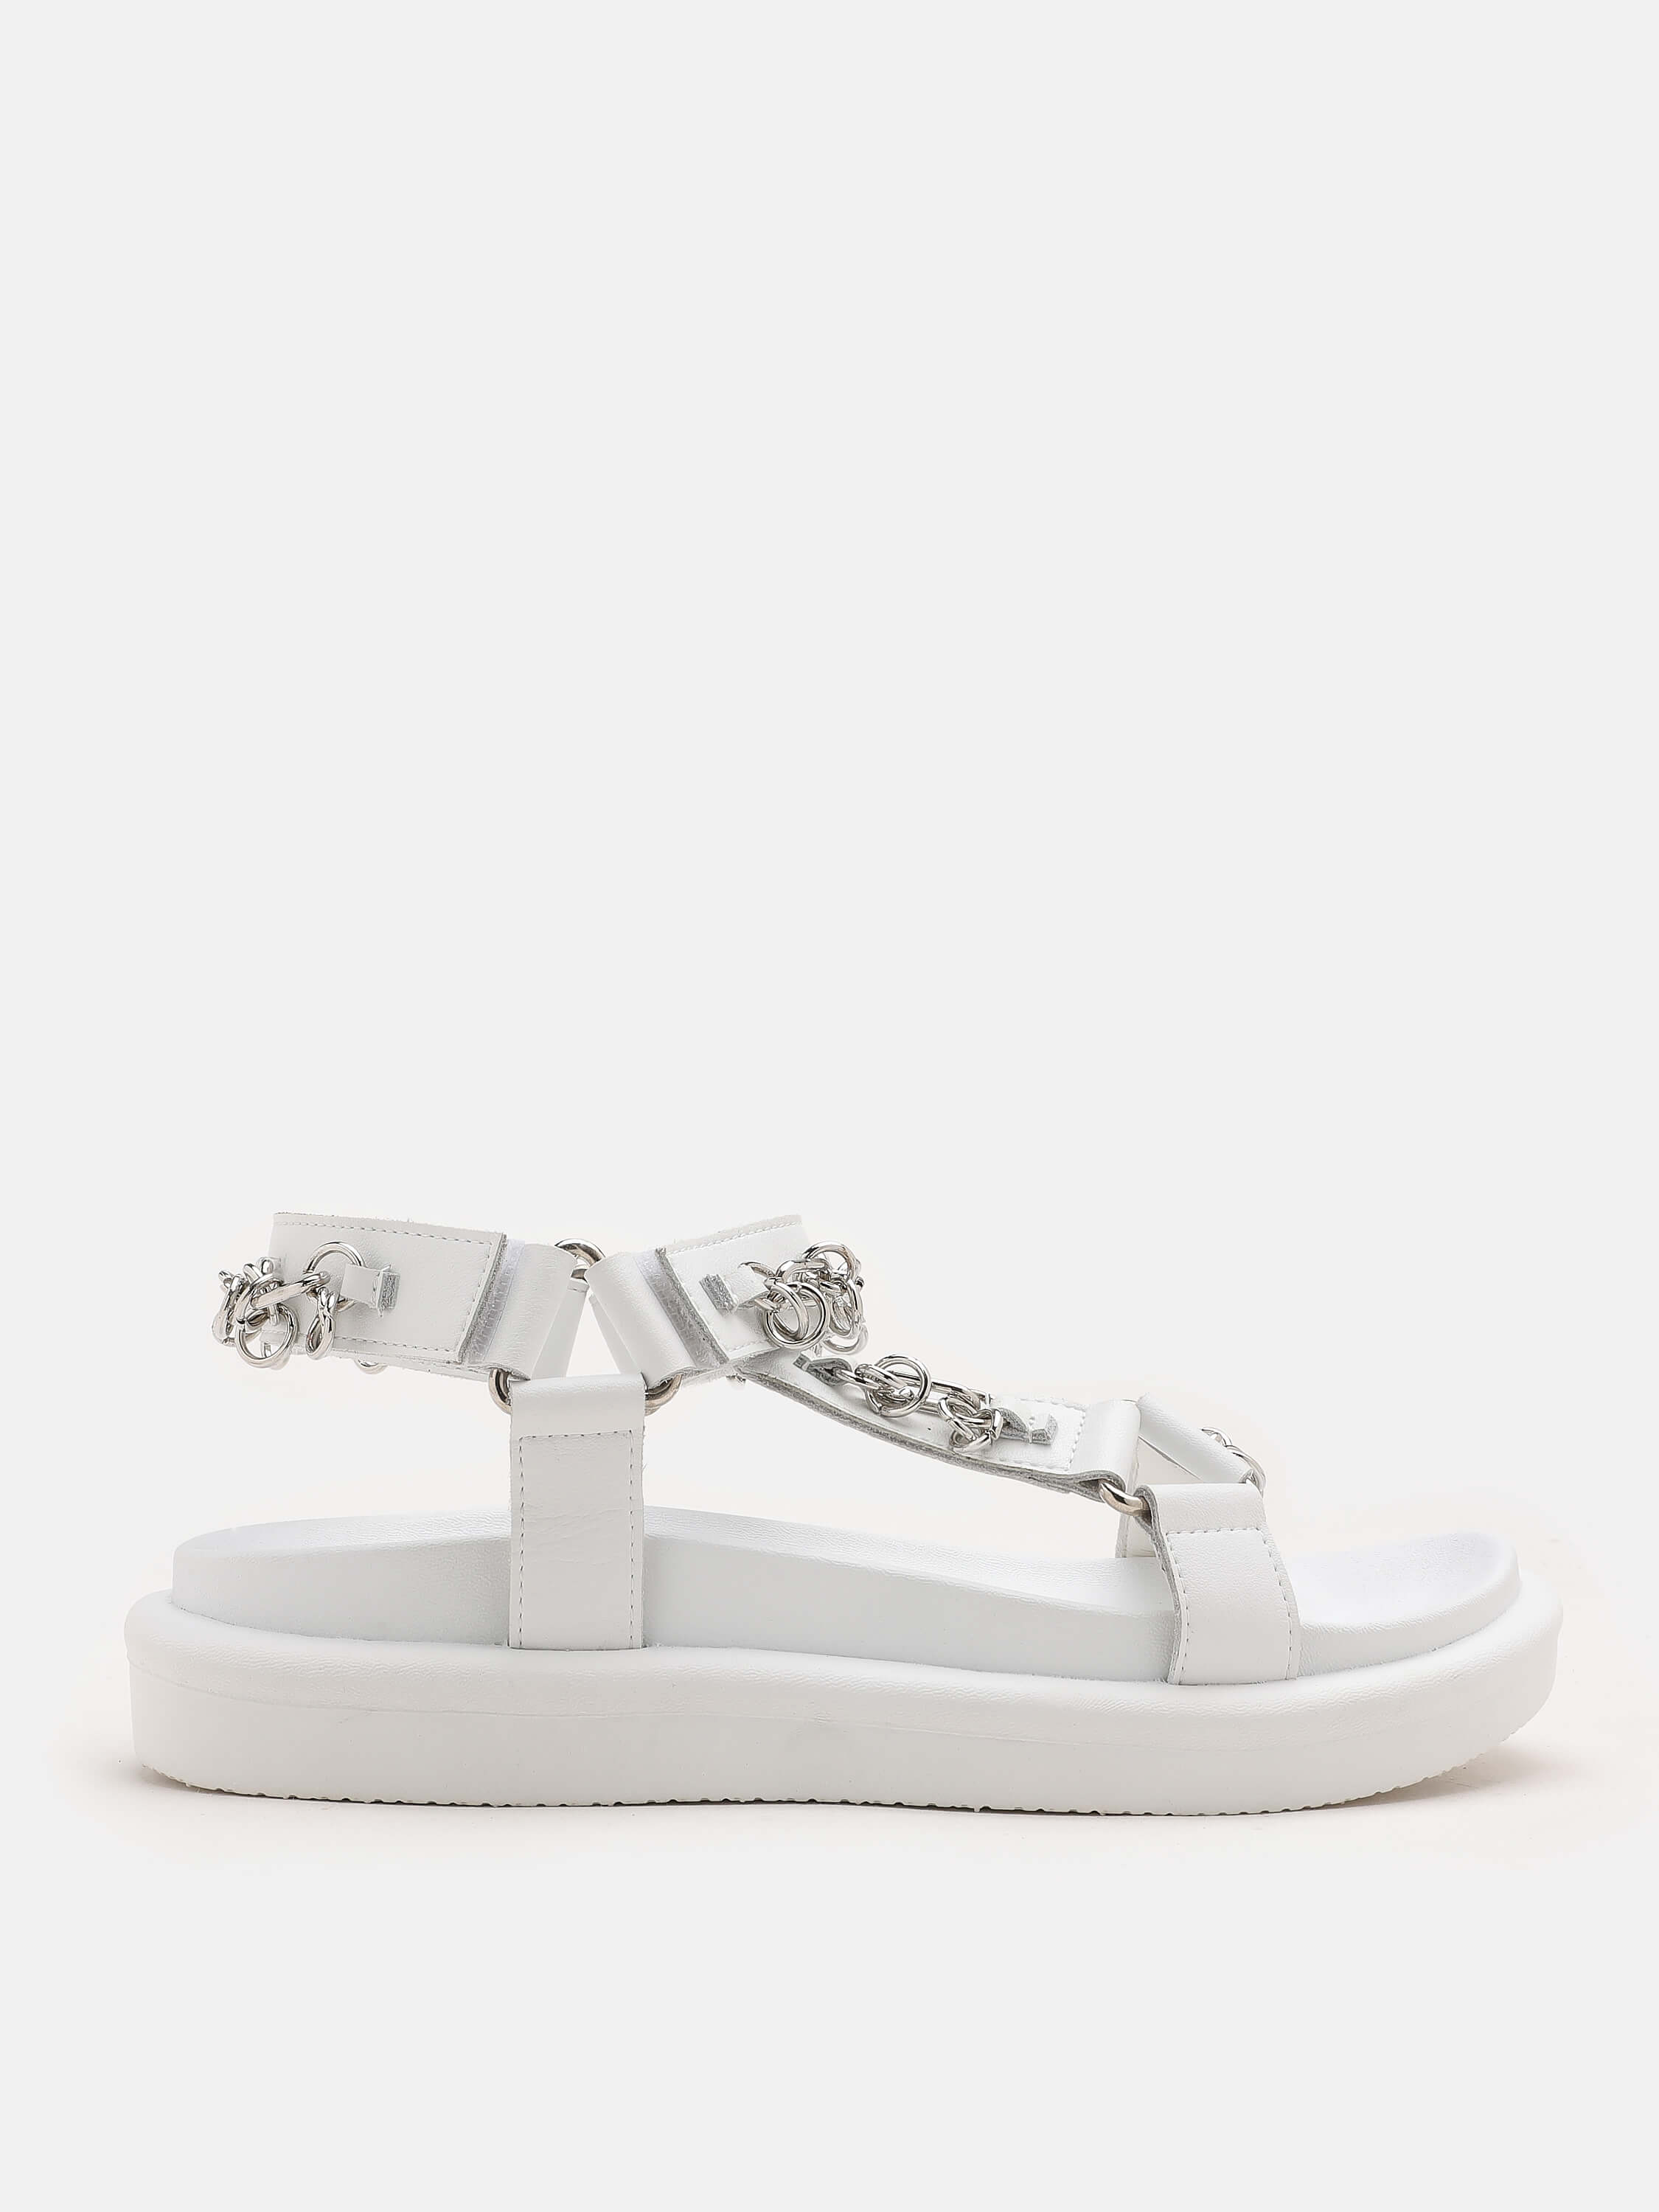 PAZZION, Octavia Platform Sandals, White